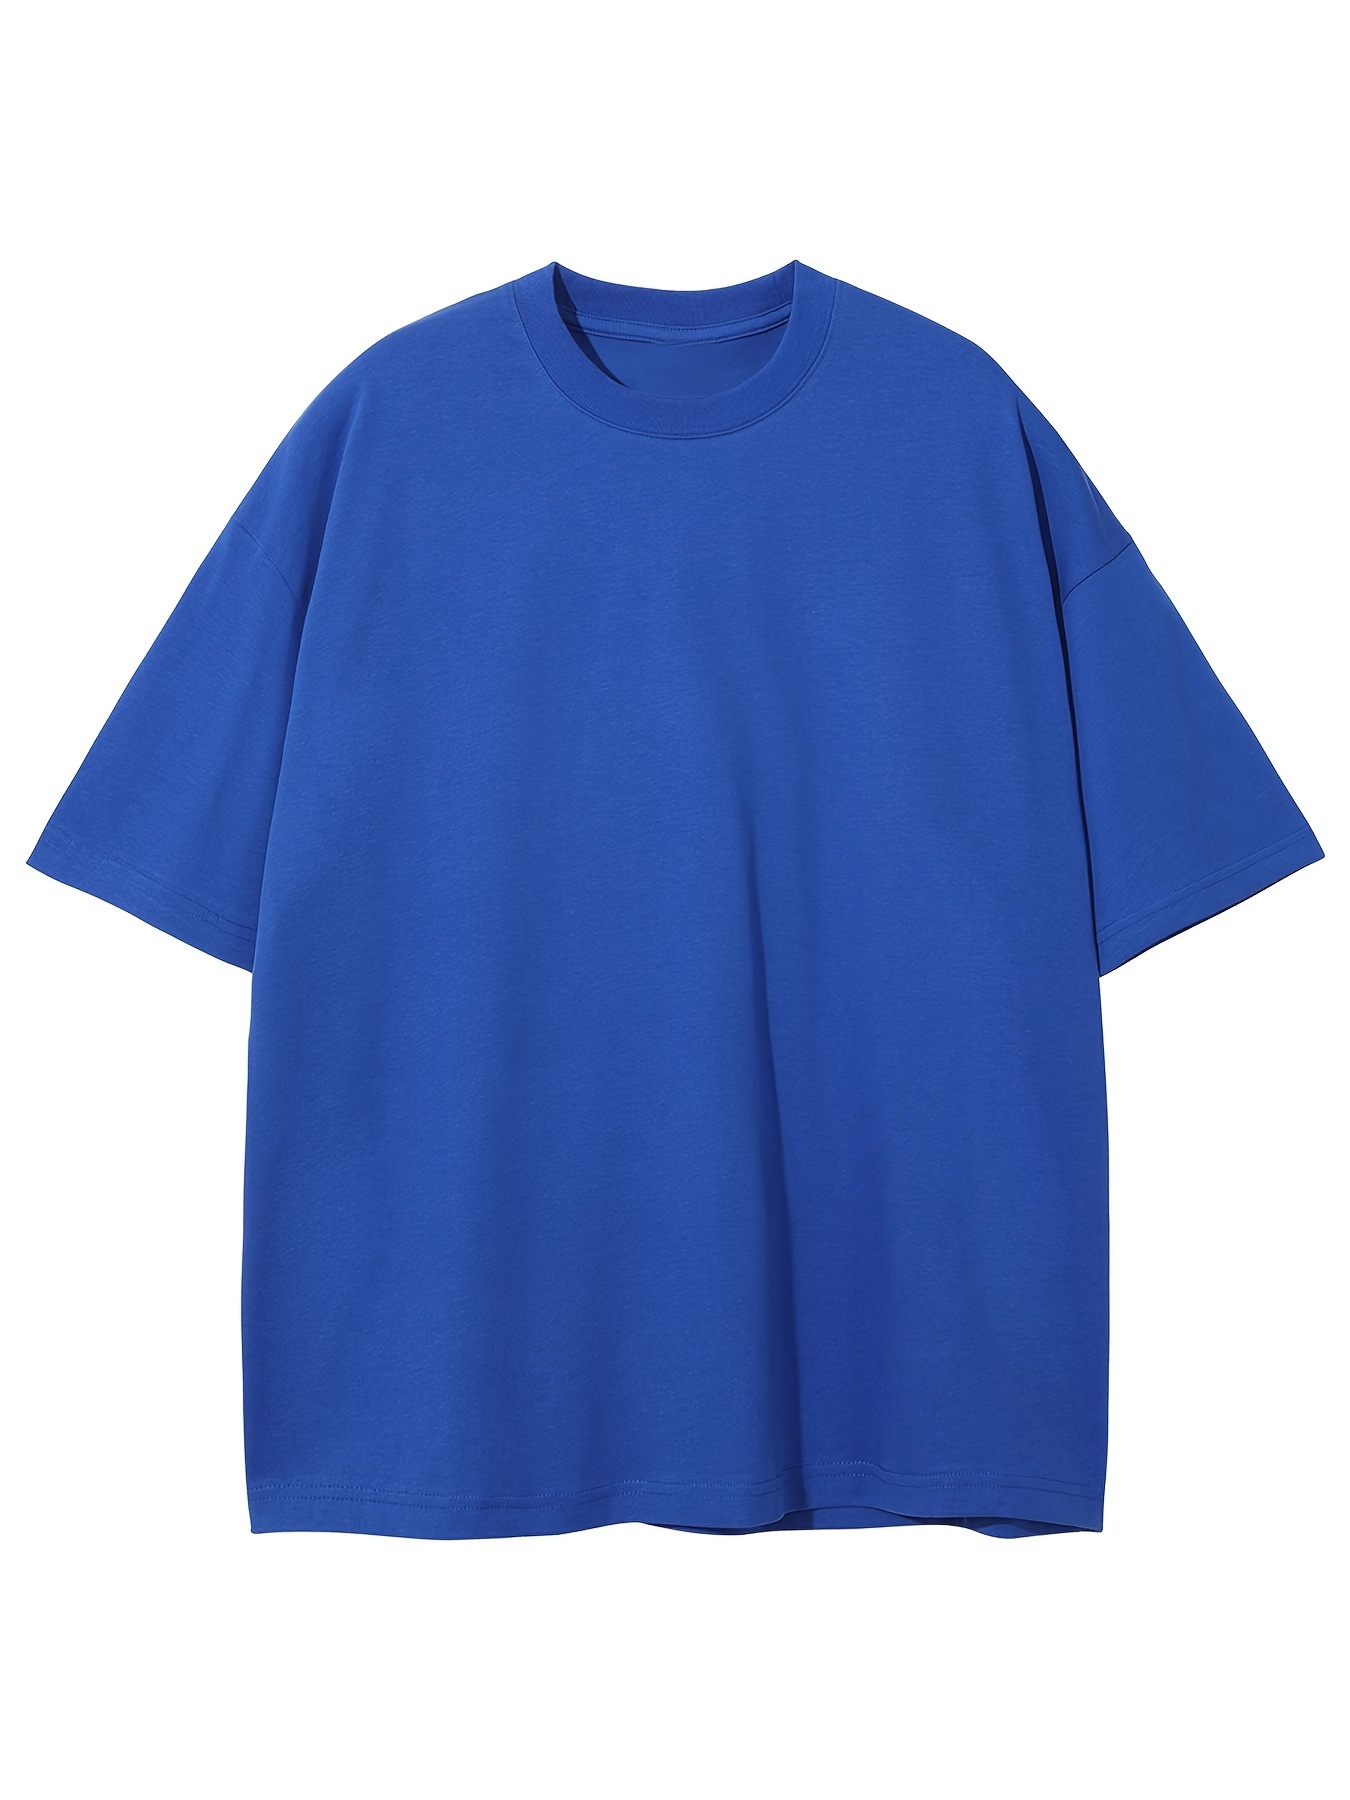 Royal Blue Shirt for Men - Supasoft Apparel - Men T-Shirt Cotton Men Shirt  Men's Value Shirts Best Mens Classic Short Sleeve Tee